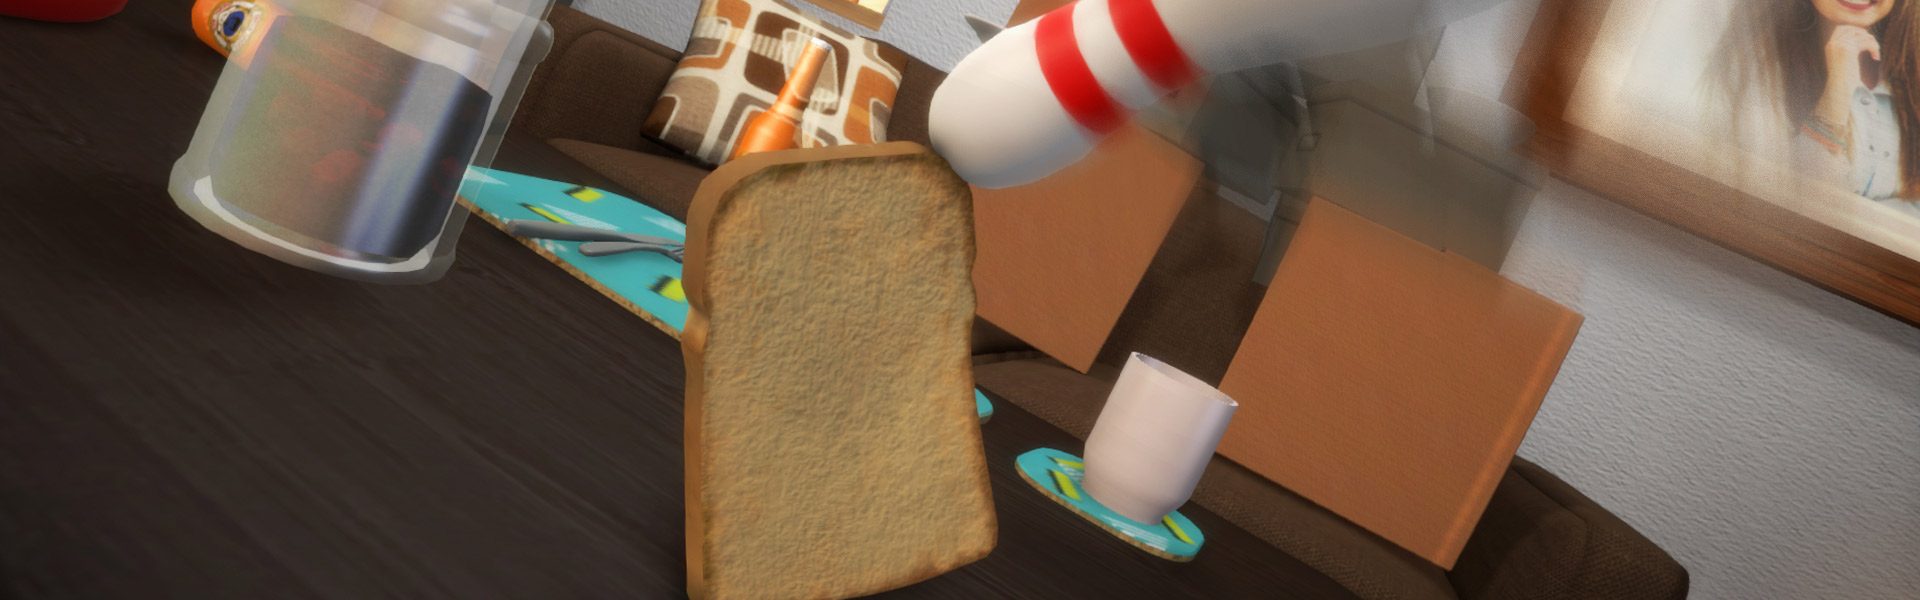 i am bread game consoles